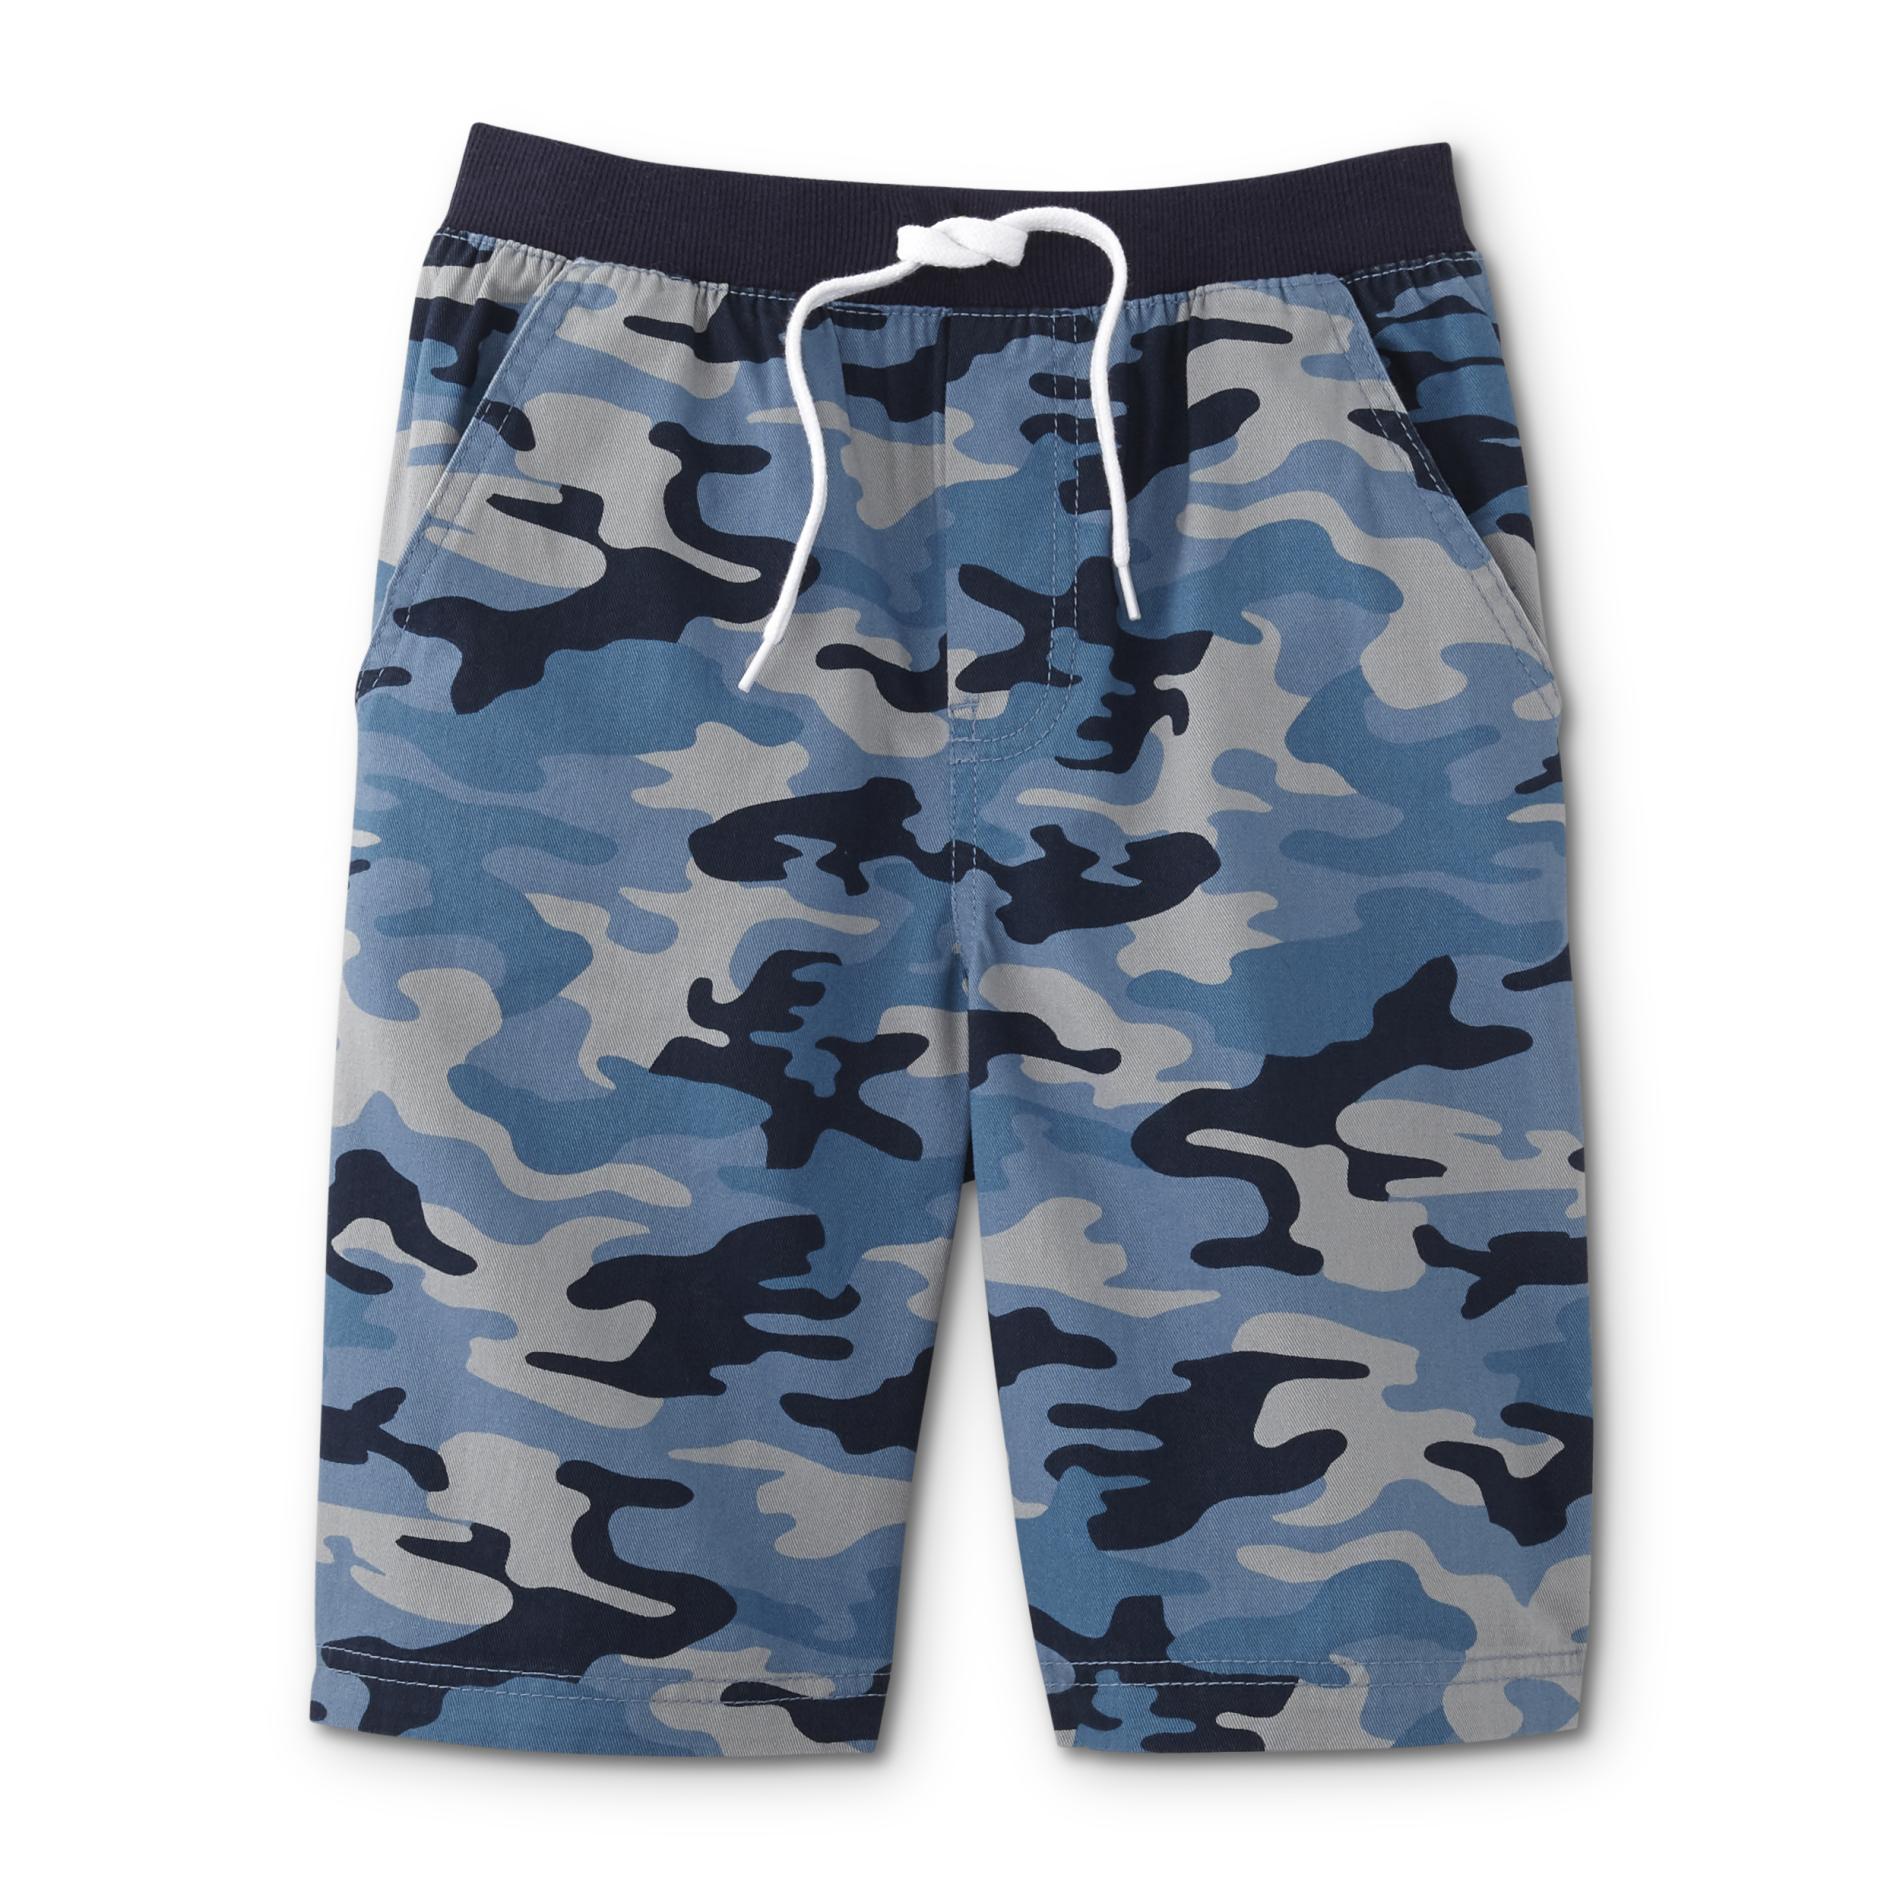 Simply Styled Boys' Husky Shorts - Camouflage